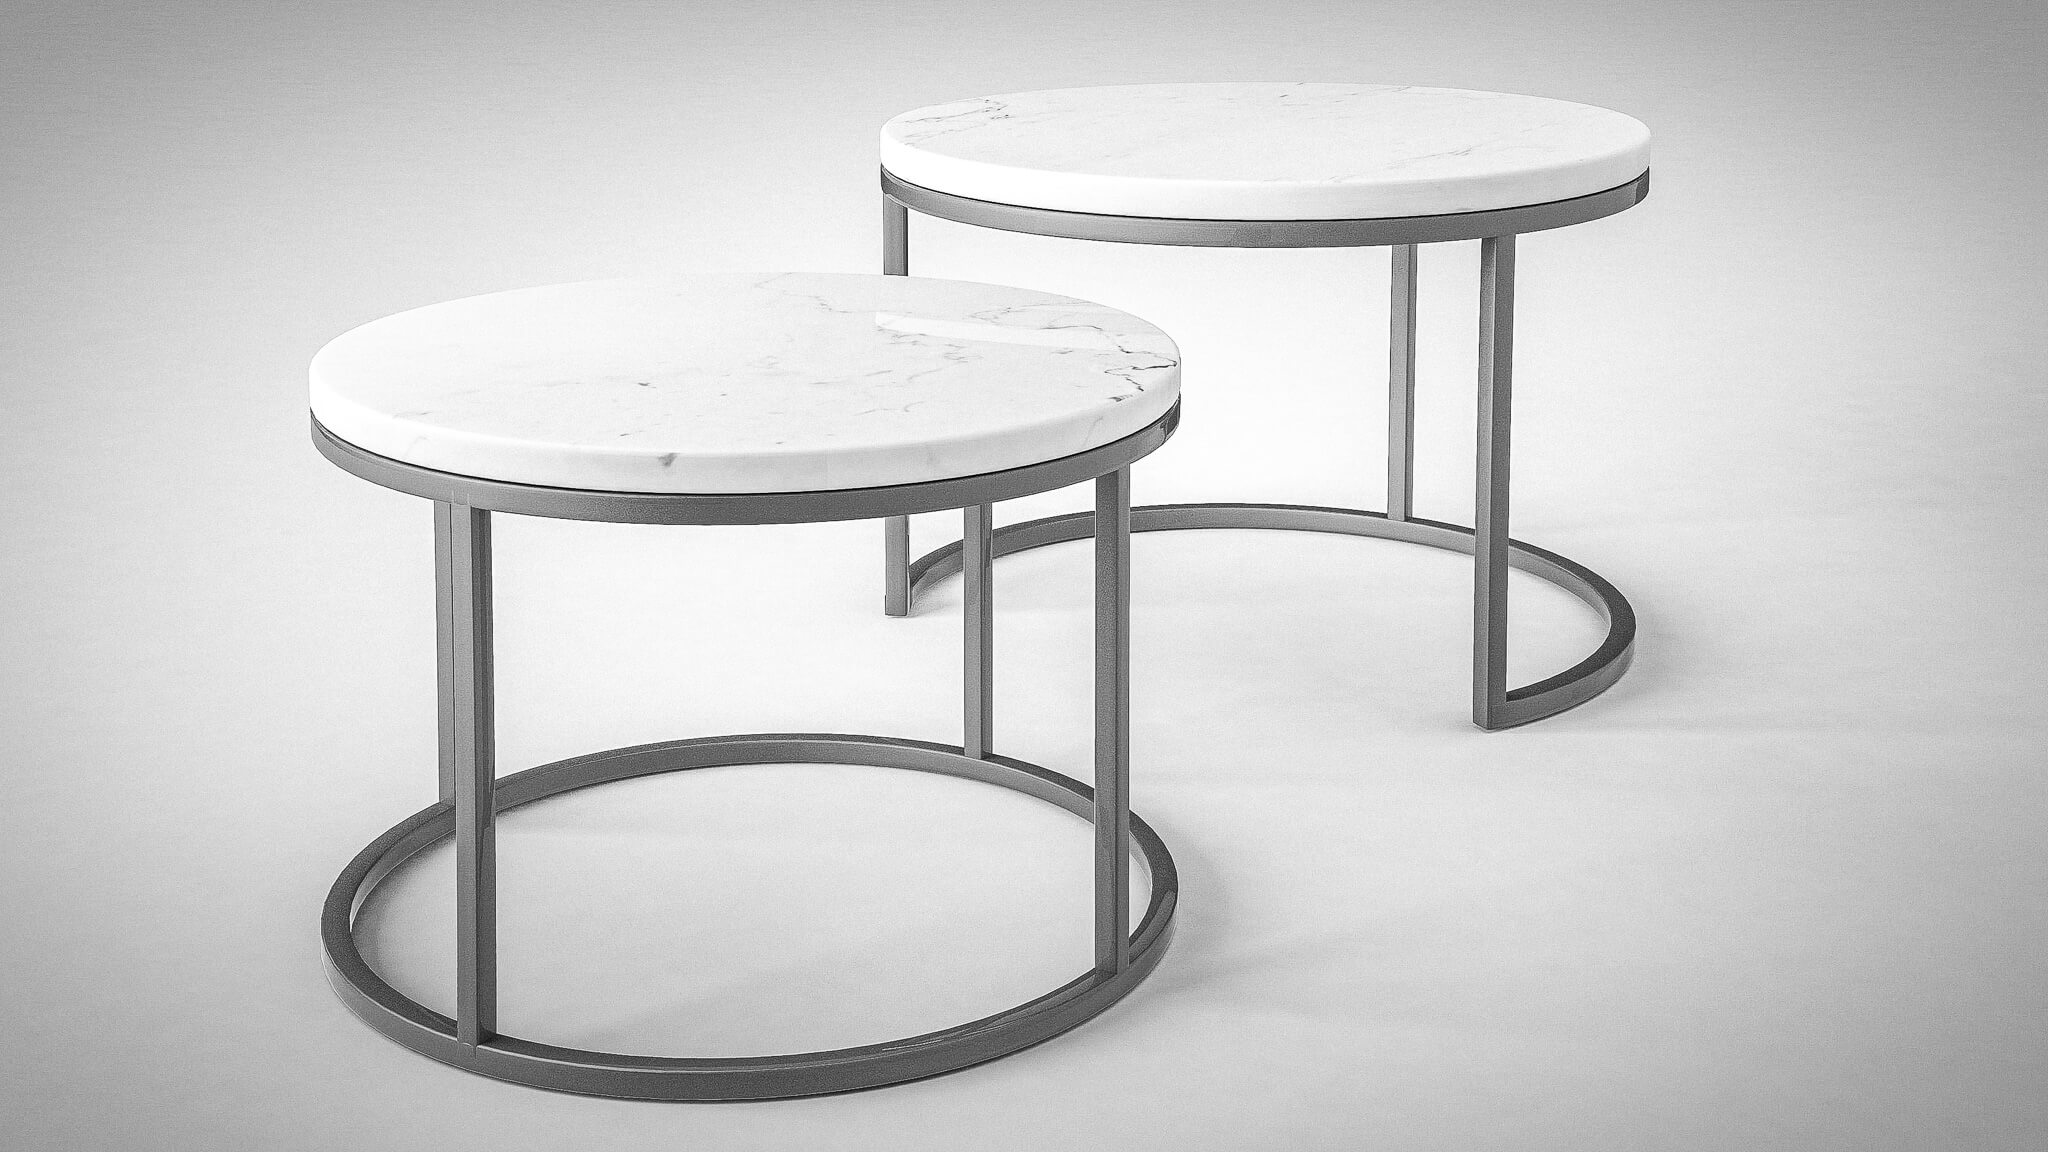 Use of Makrana marble in modern furniture design